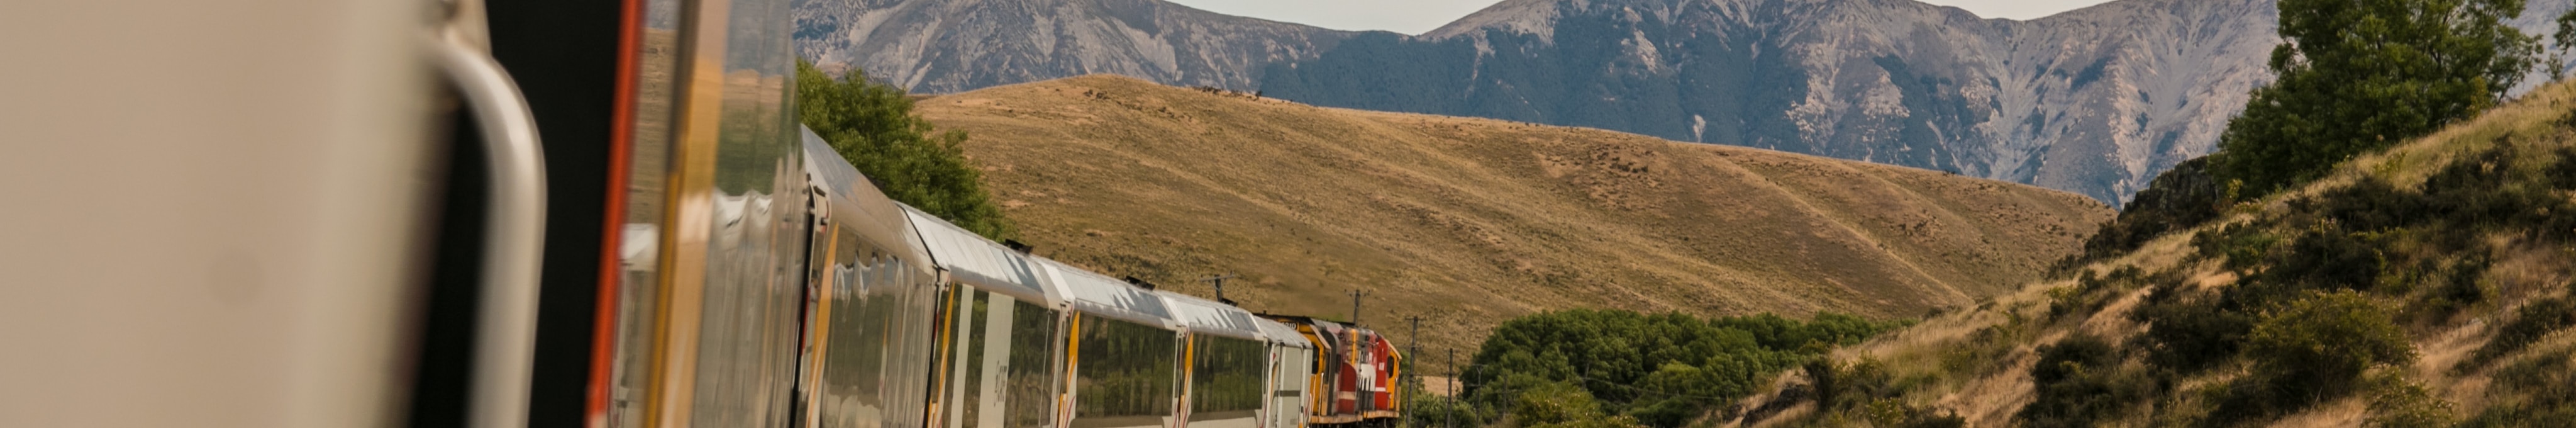 GMexico Transportes SAB de CV's railway network passes through ecoregions across Mexico and the US